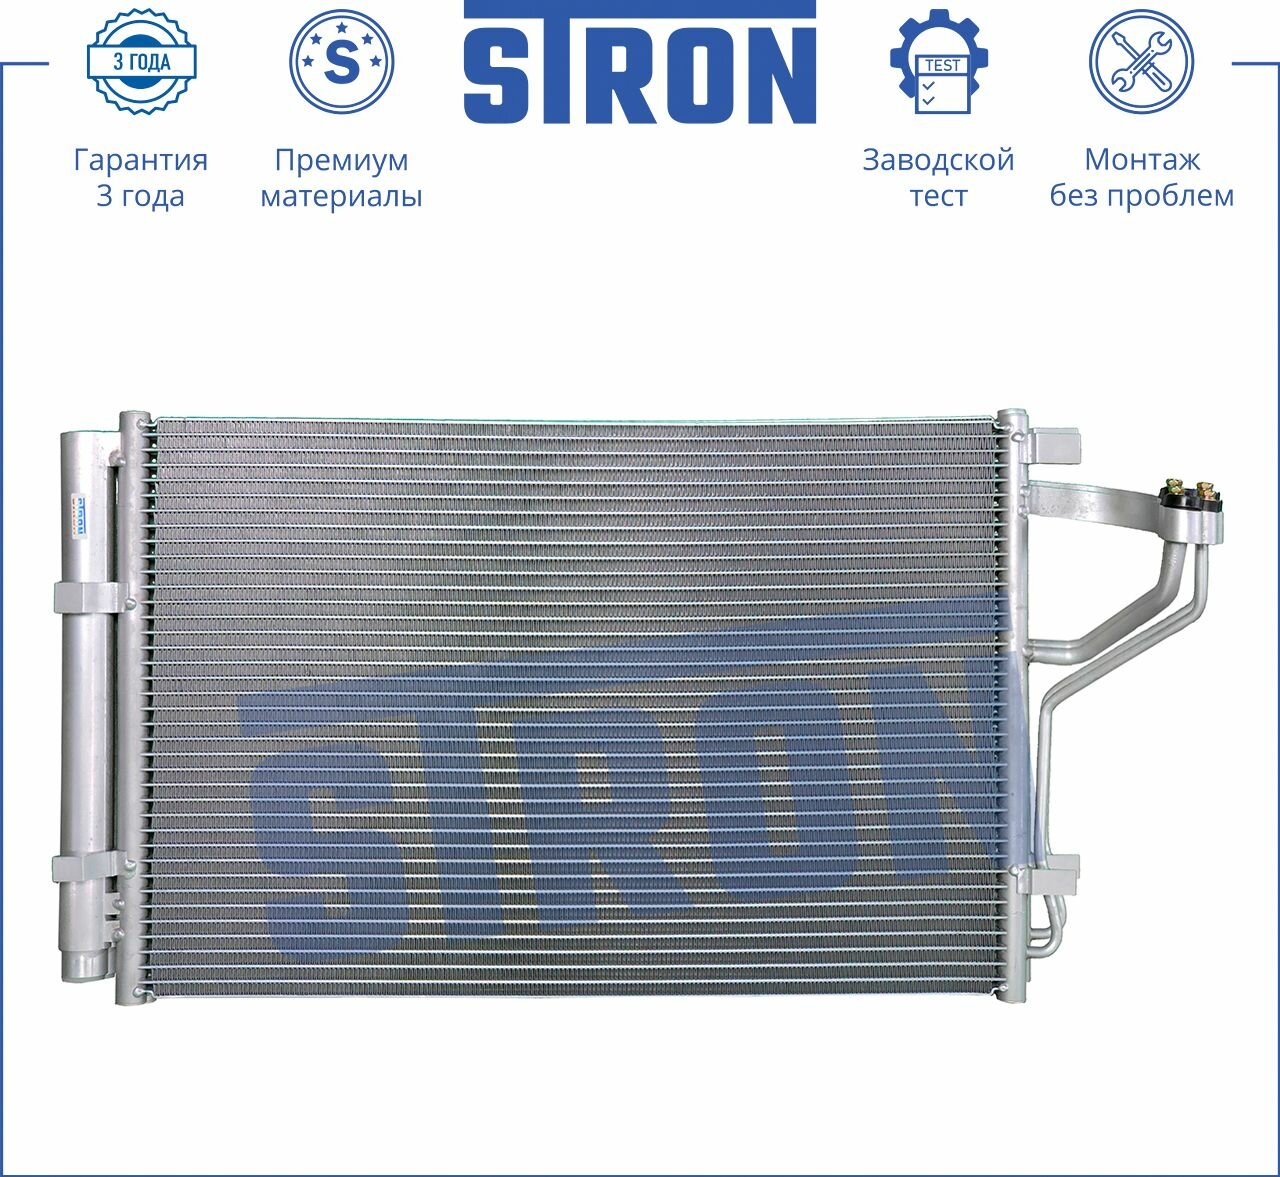 Радиатор кондиционера STRON для автомобиля HYUNDAI, KIA STRON арт. STC0021